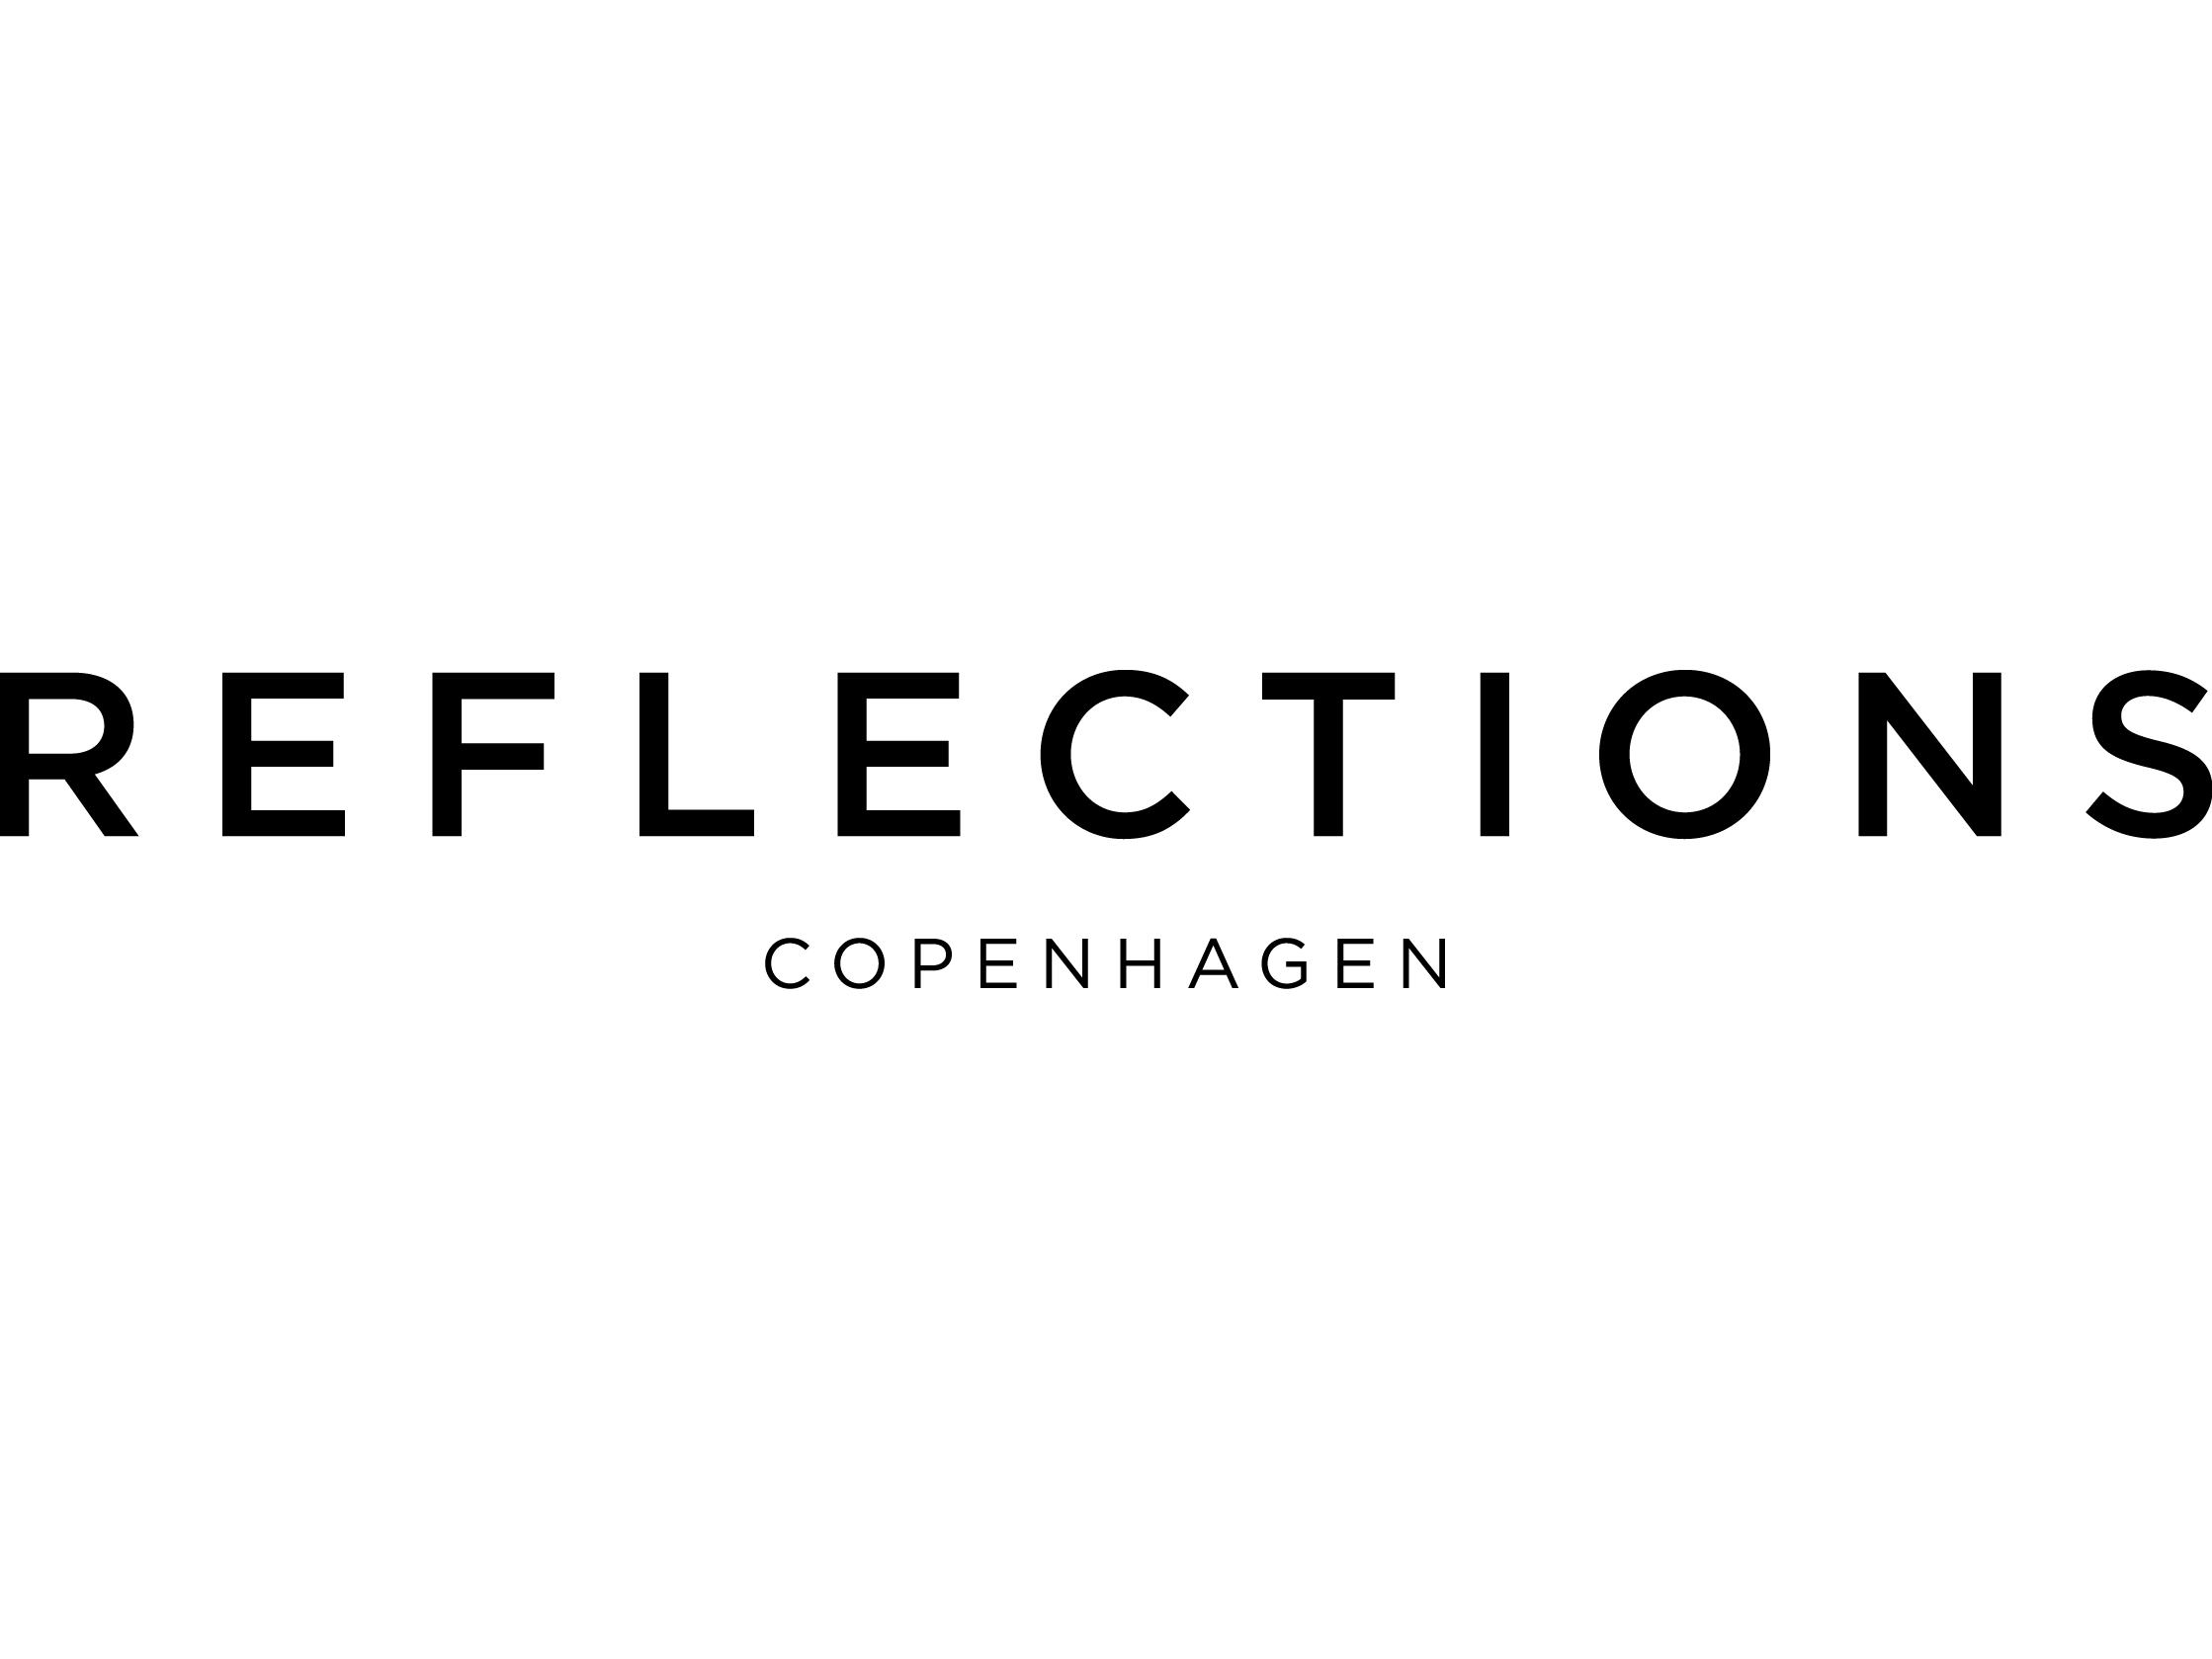 Reflections Logo - Reflections Copenhagen. Crystal decor items